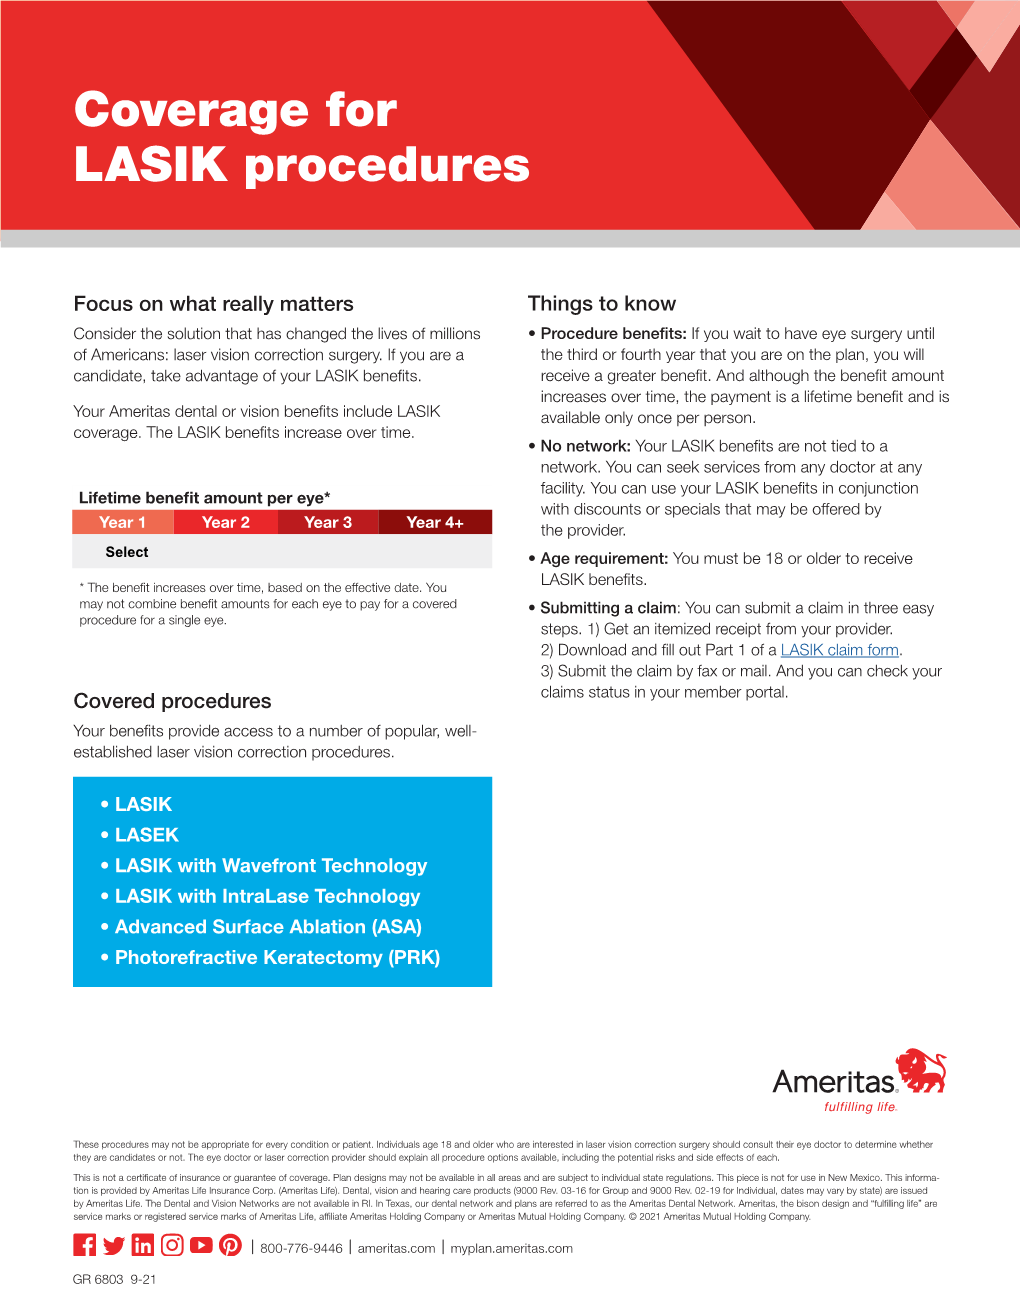 Coverage for LASIK Procedures